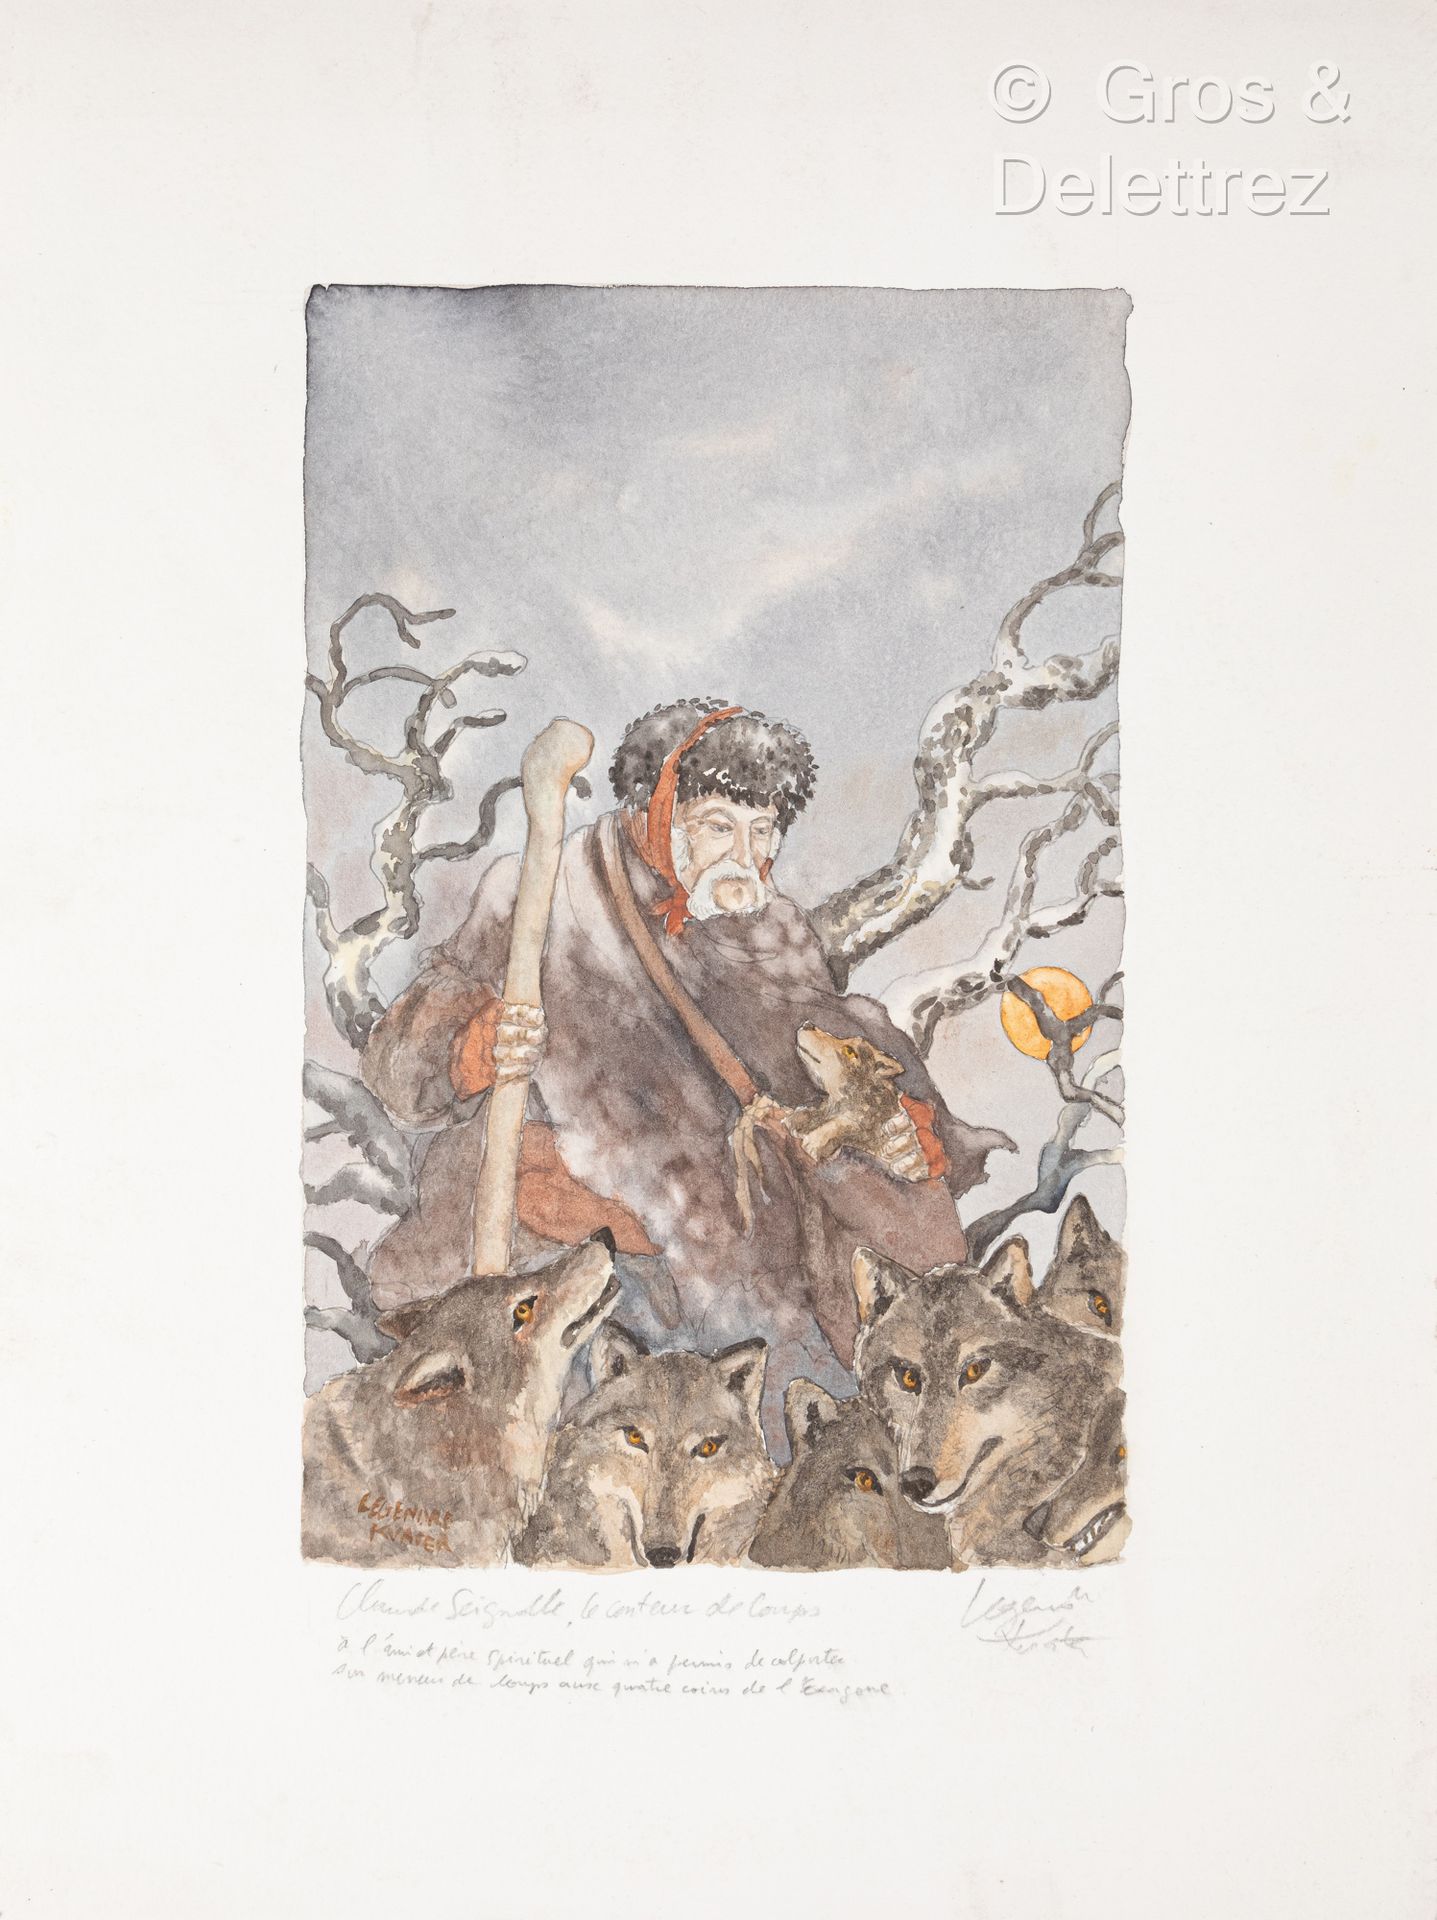 Null (SD) Philippe LEGENDRE-KVATER (生于1947年)

狼的故事家克劳德-塞格诺尔

铅笔和水彩画，签名并献给 "允许我把他&hellip;